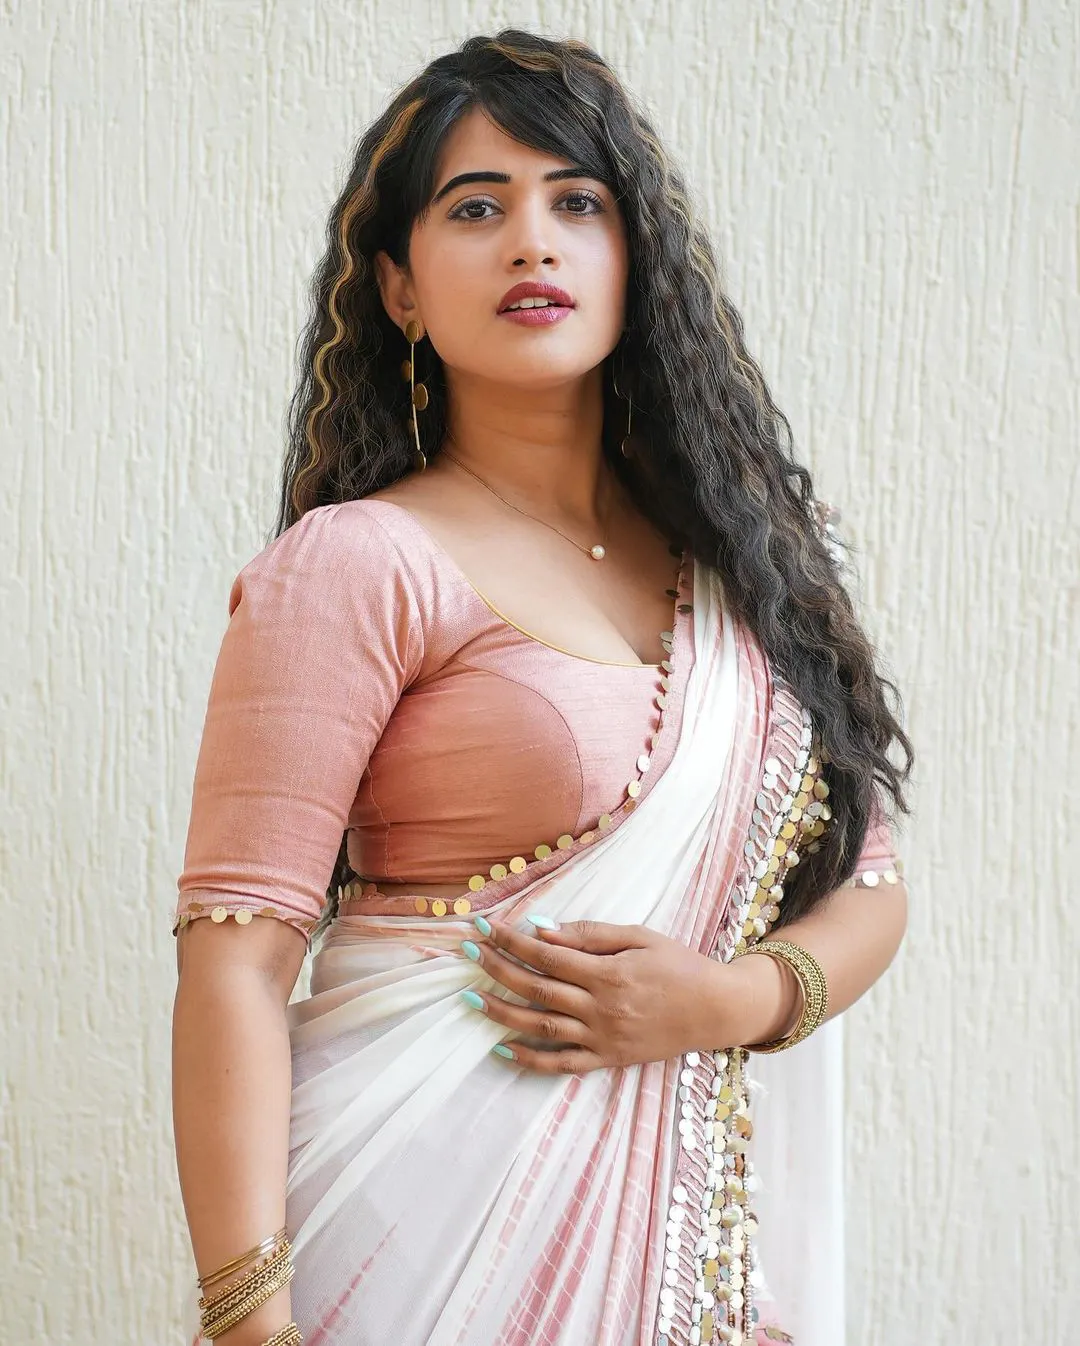 Sravanthi Chokarapu Stunning Looks in Saree